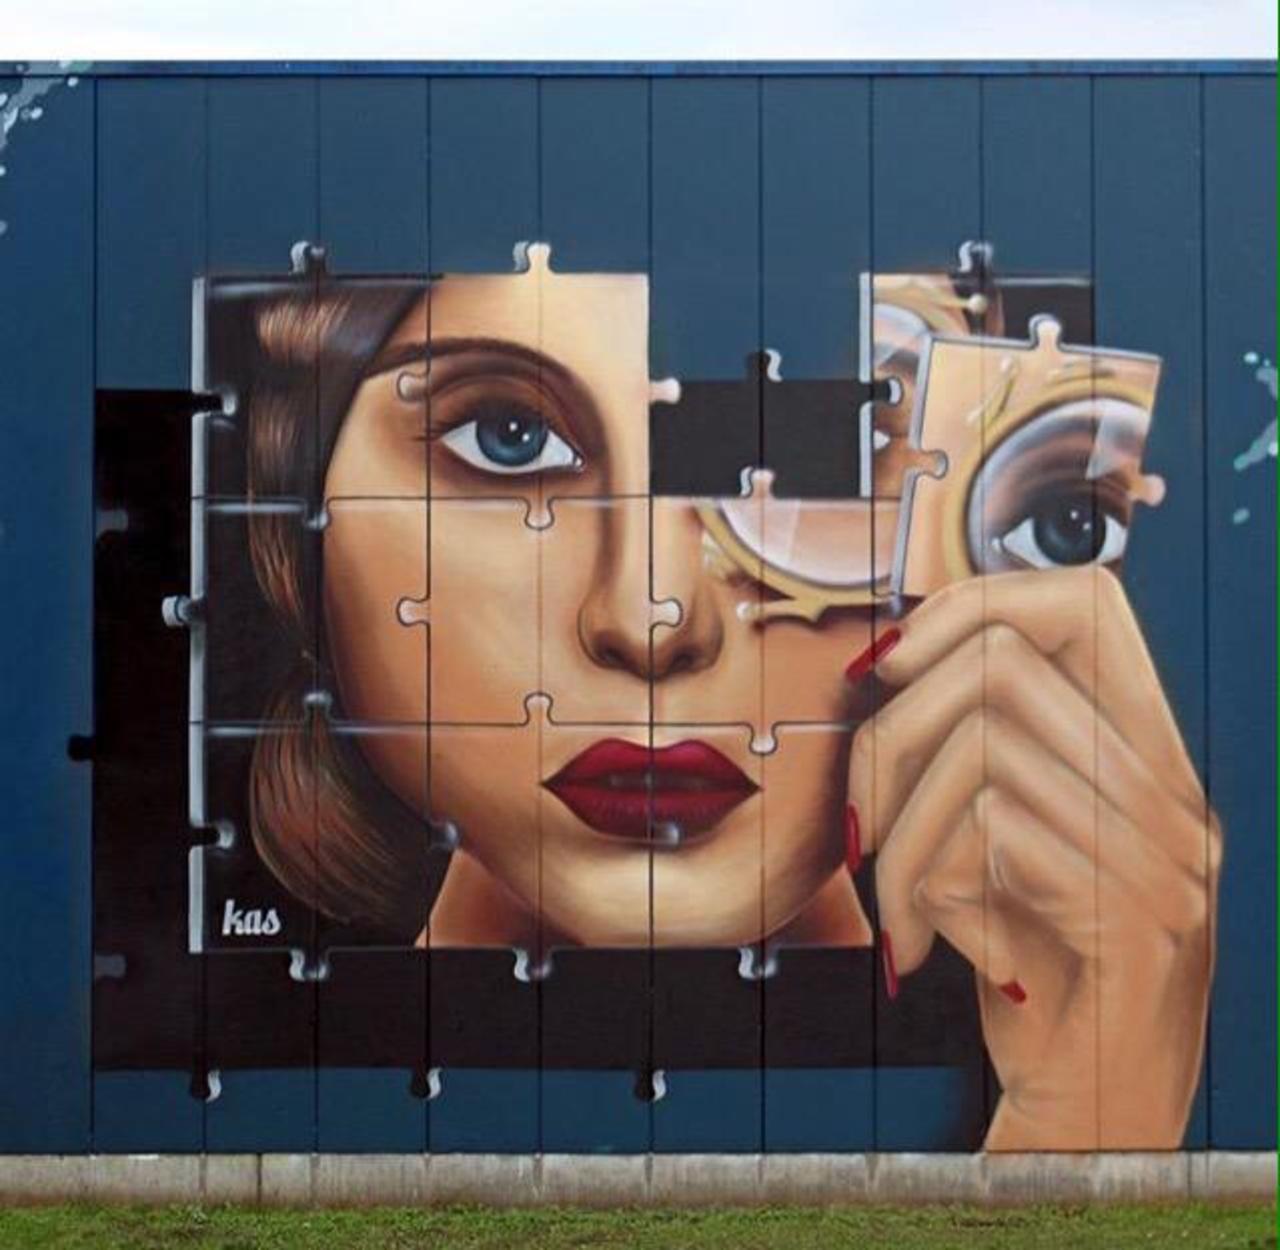 Kas Art's new Street Art "Piece of me" in Aalst Belgium 

#art #graffiti #mural #streetart http://t.co/6cz52tVWUQ